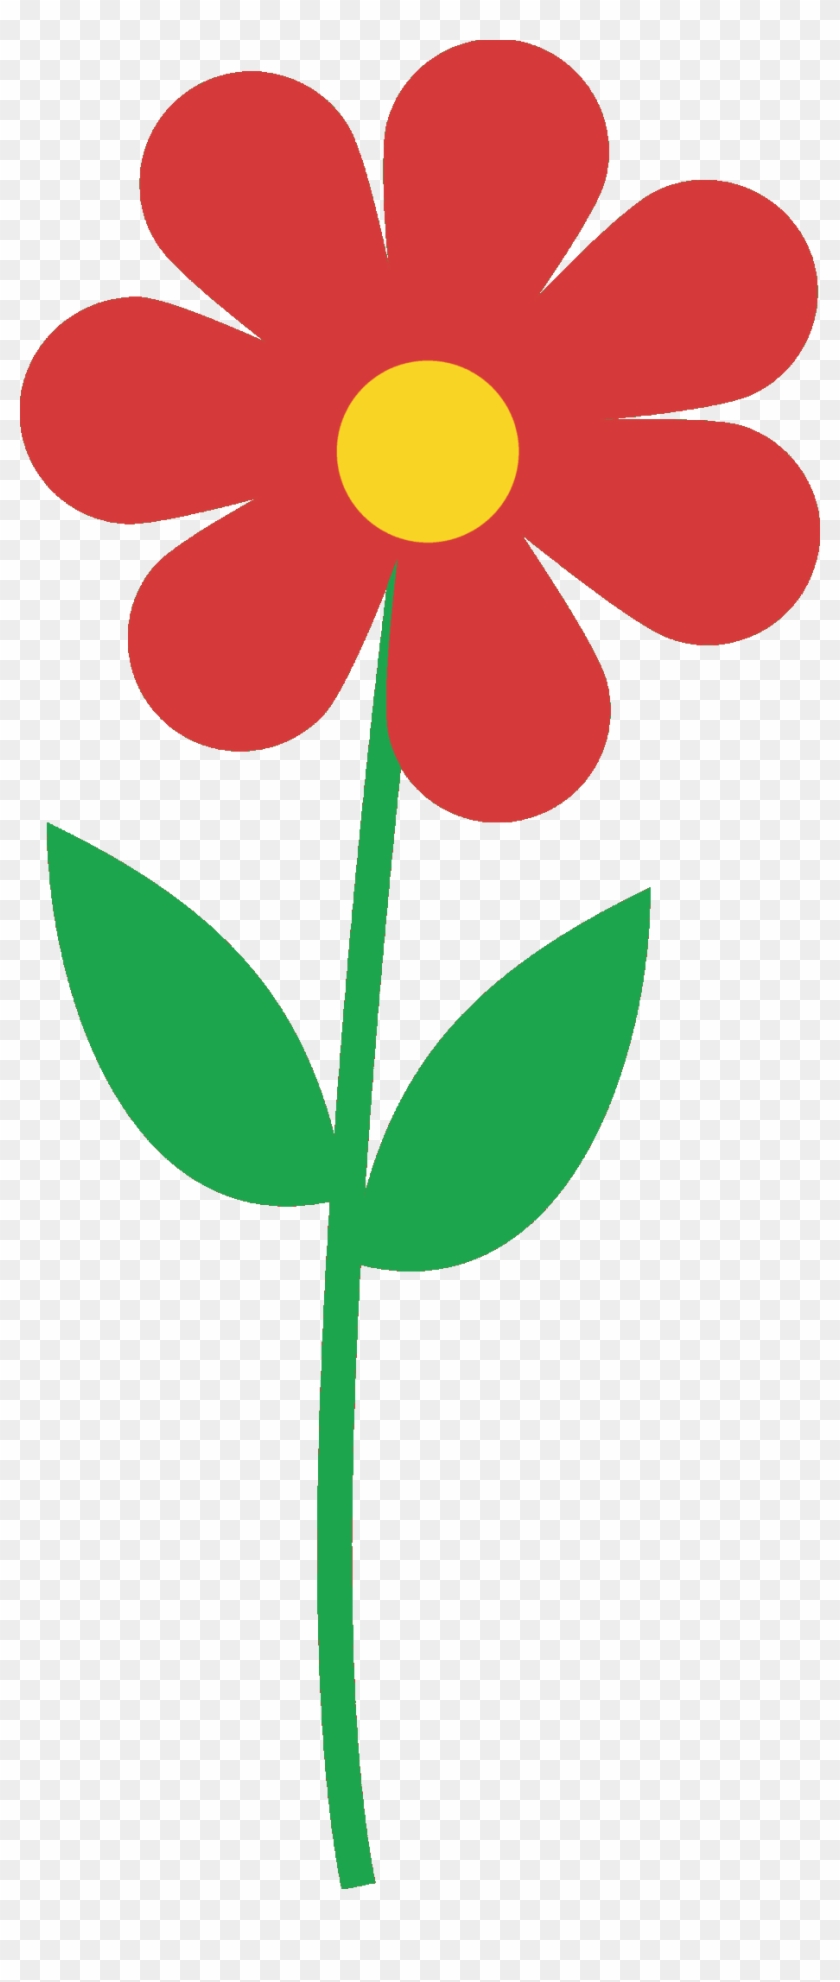 Single Flower Clipart - Single Flower Clip Art - Png Download #468158